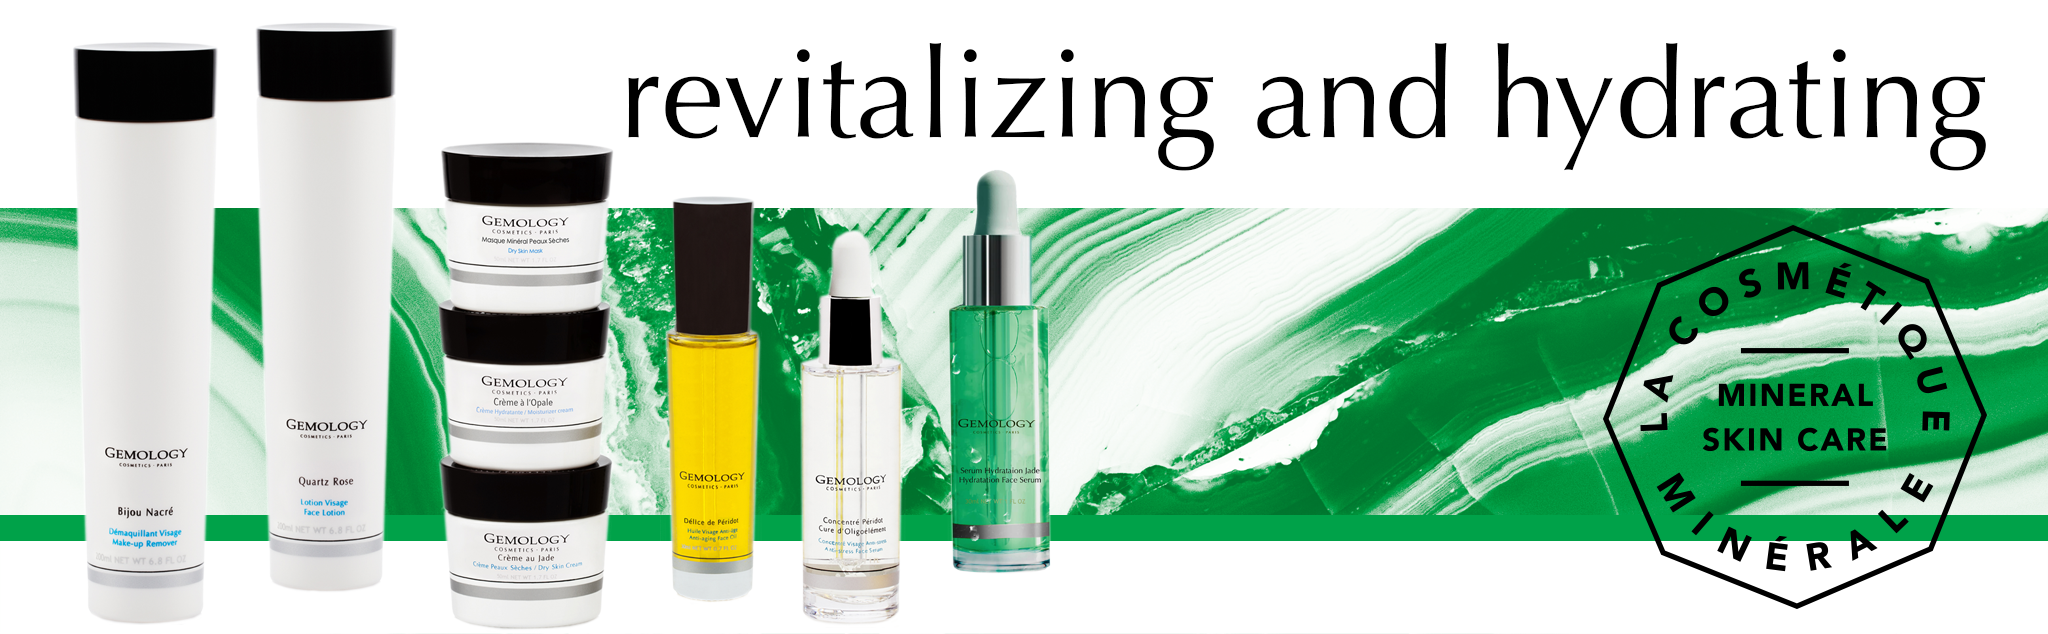 Gemology-cosmetics-paris-dry-hydration-skincare-products-australia-new-zealand